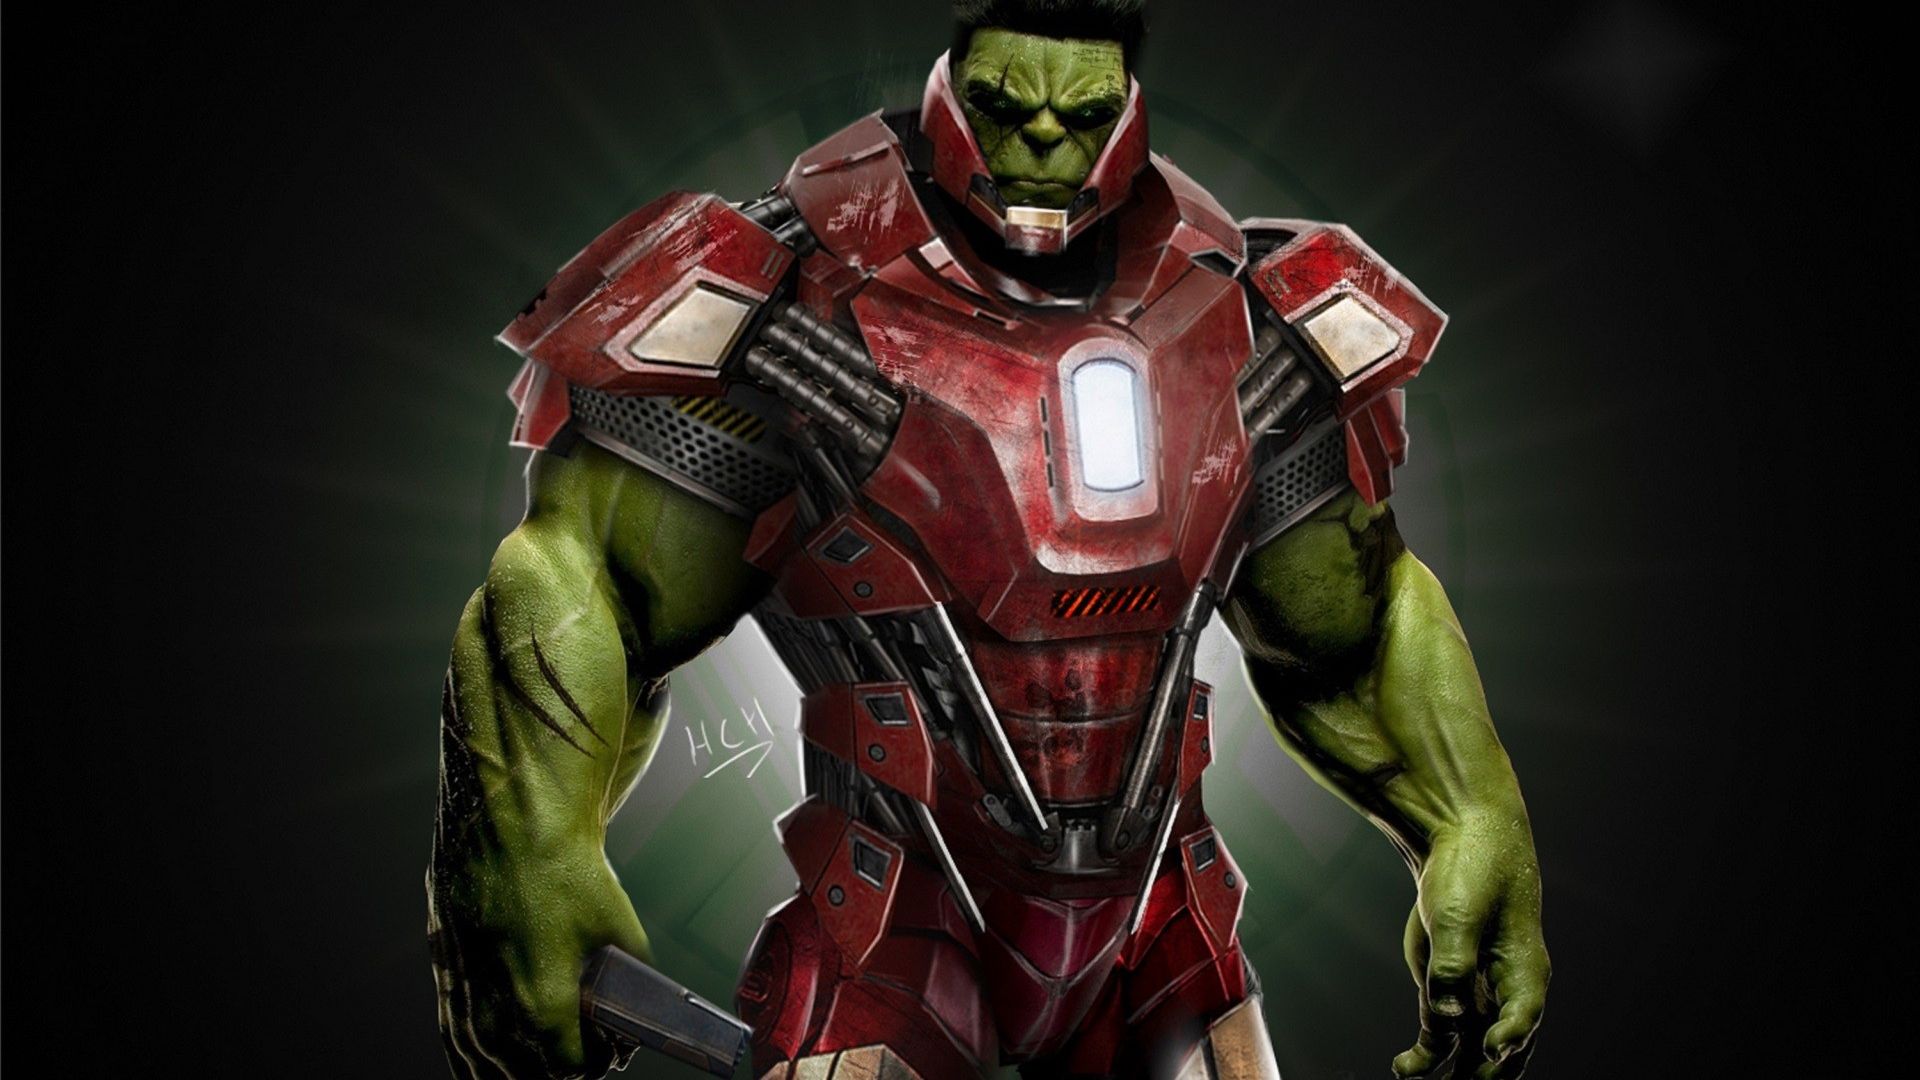 Wallpaper Hulk in iron man's suit, marvel comics